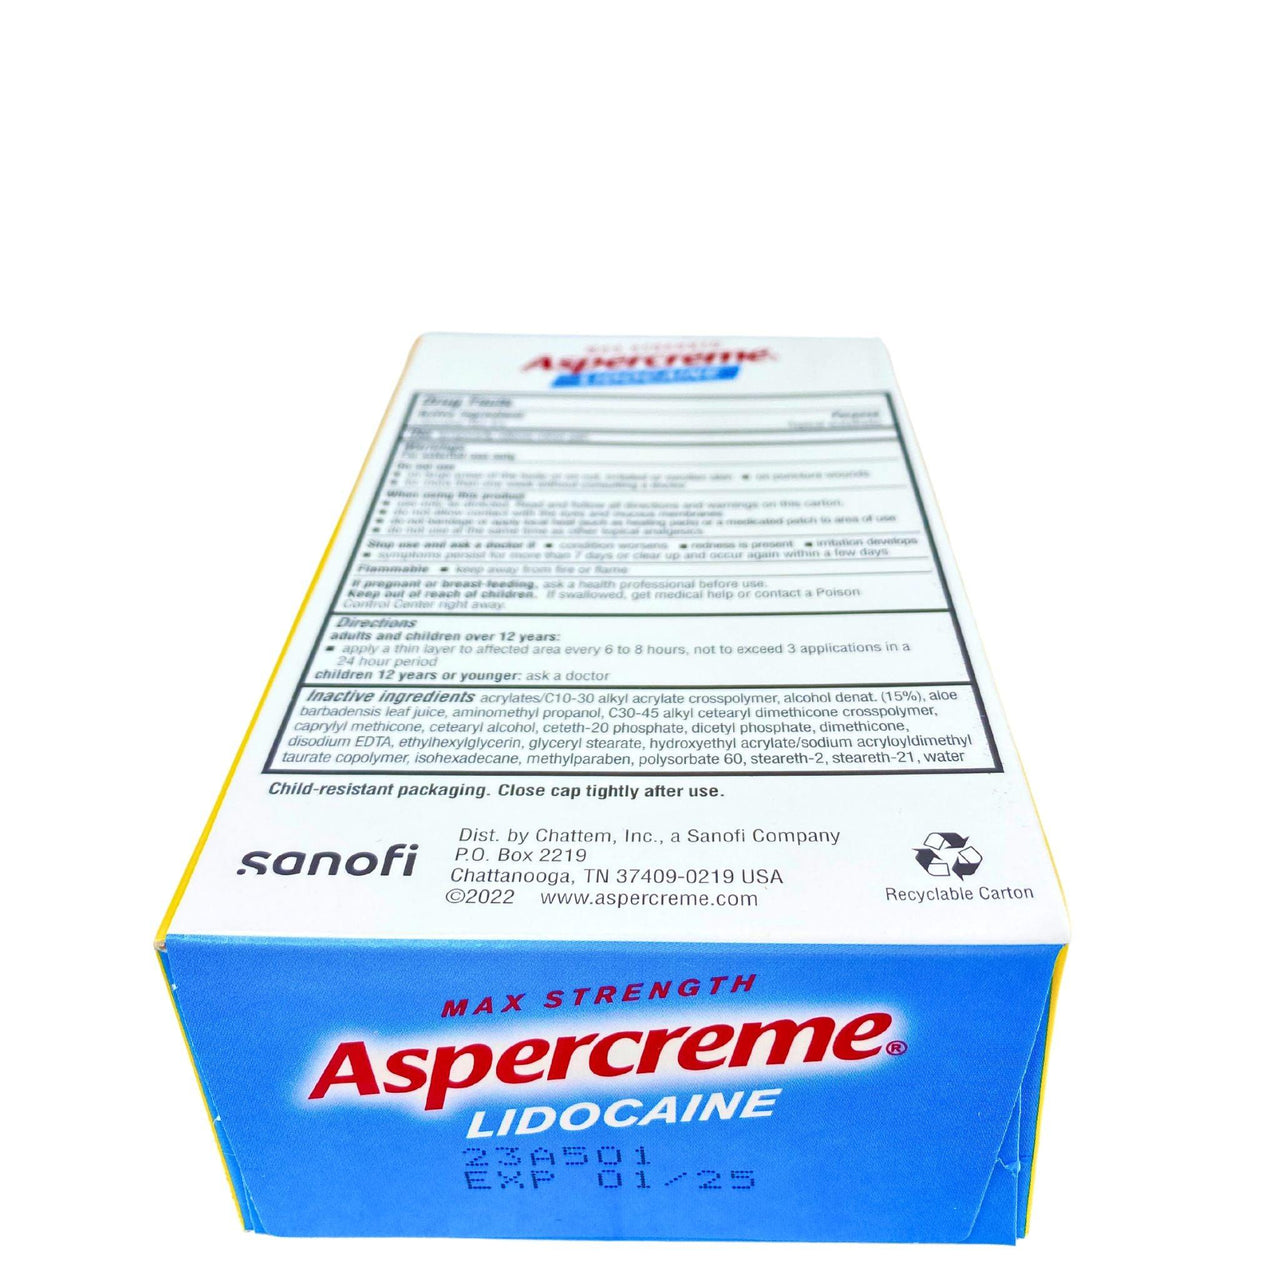 Max Strength Aspercreme with 4% Lidocaine (80 Pcs Lot) - Discount Wholesalers Inc